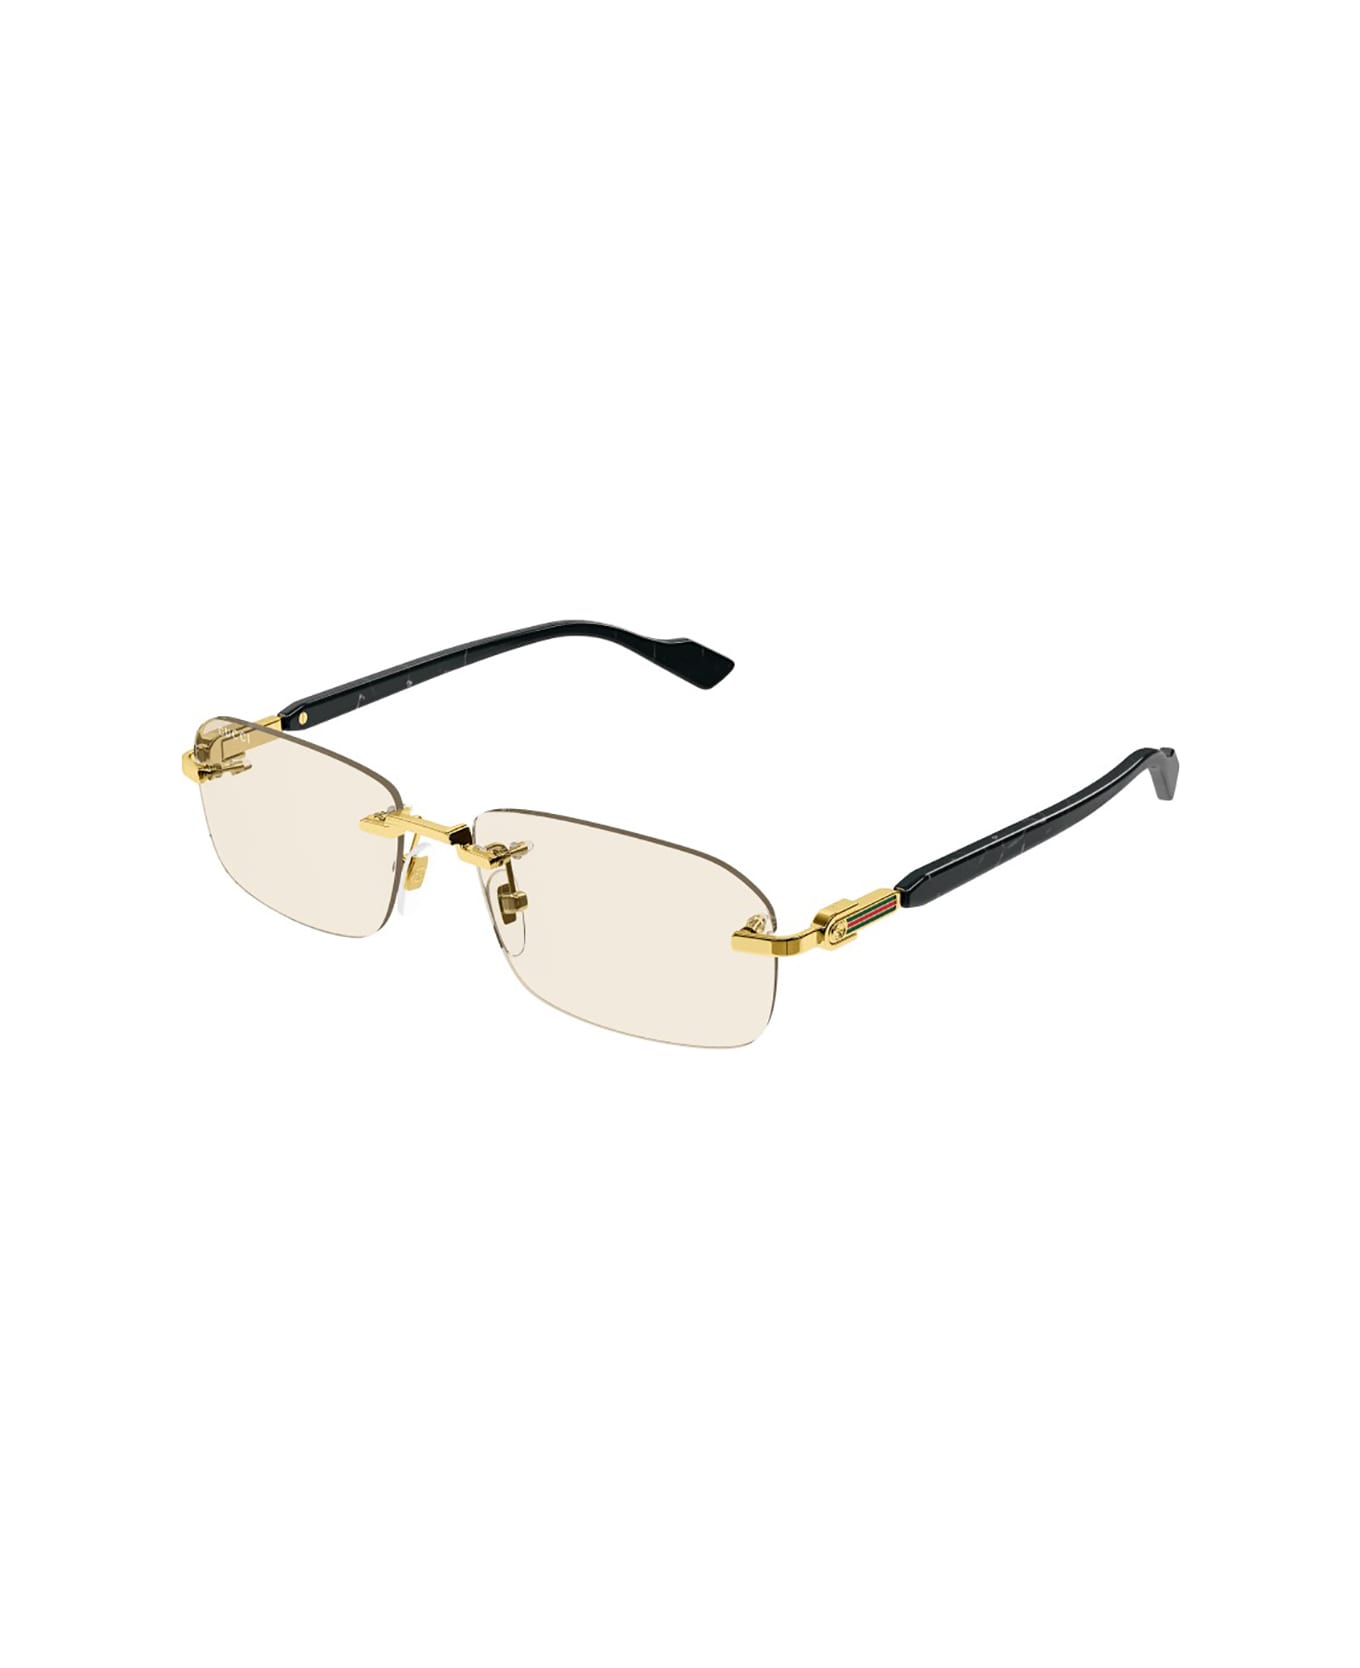 Gucci Eyewear Gg1221s Sunglasses - 005 gold black yellow